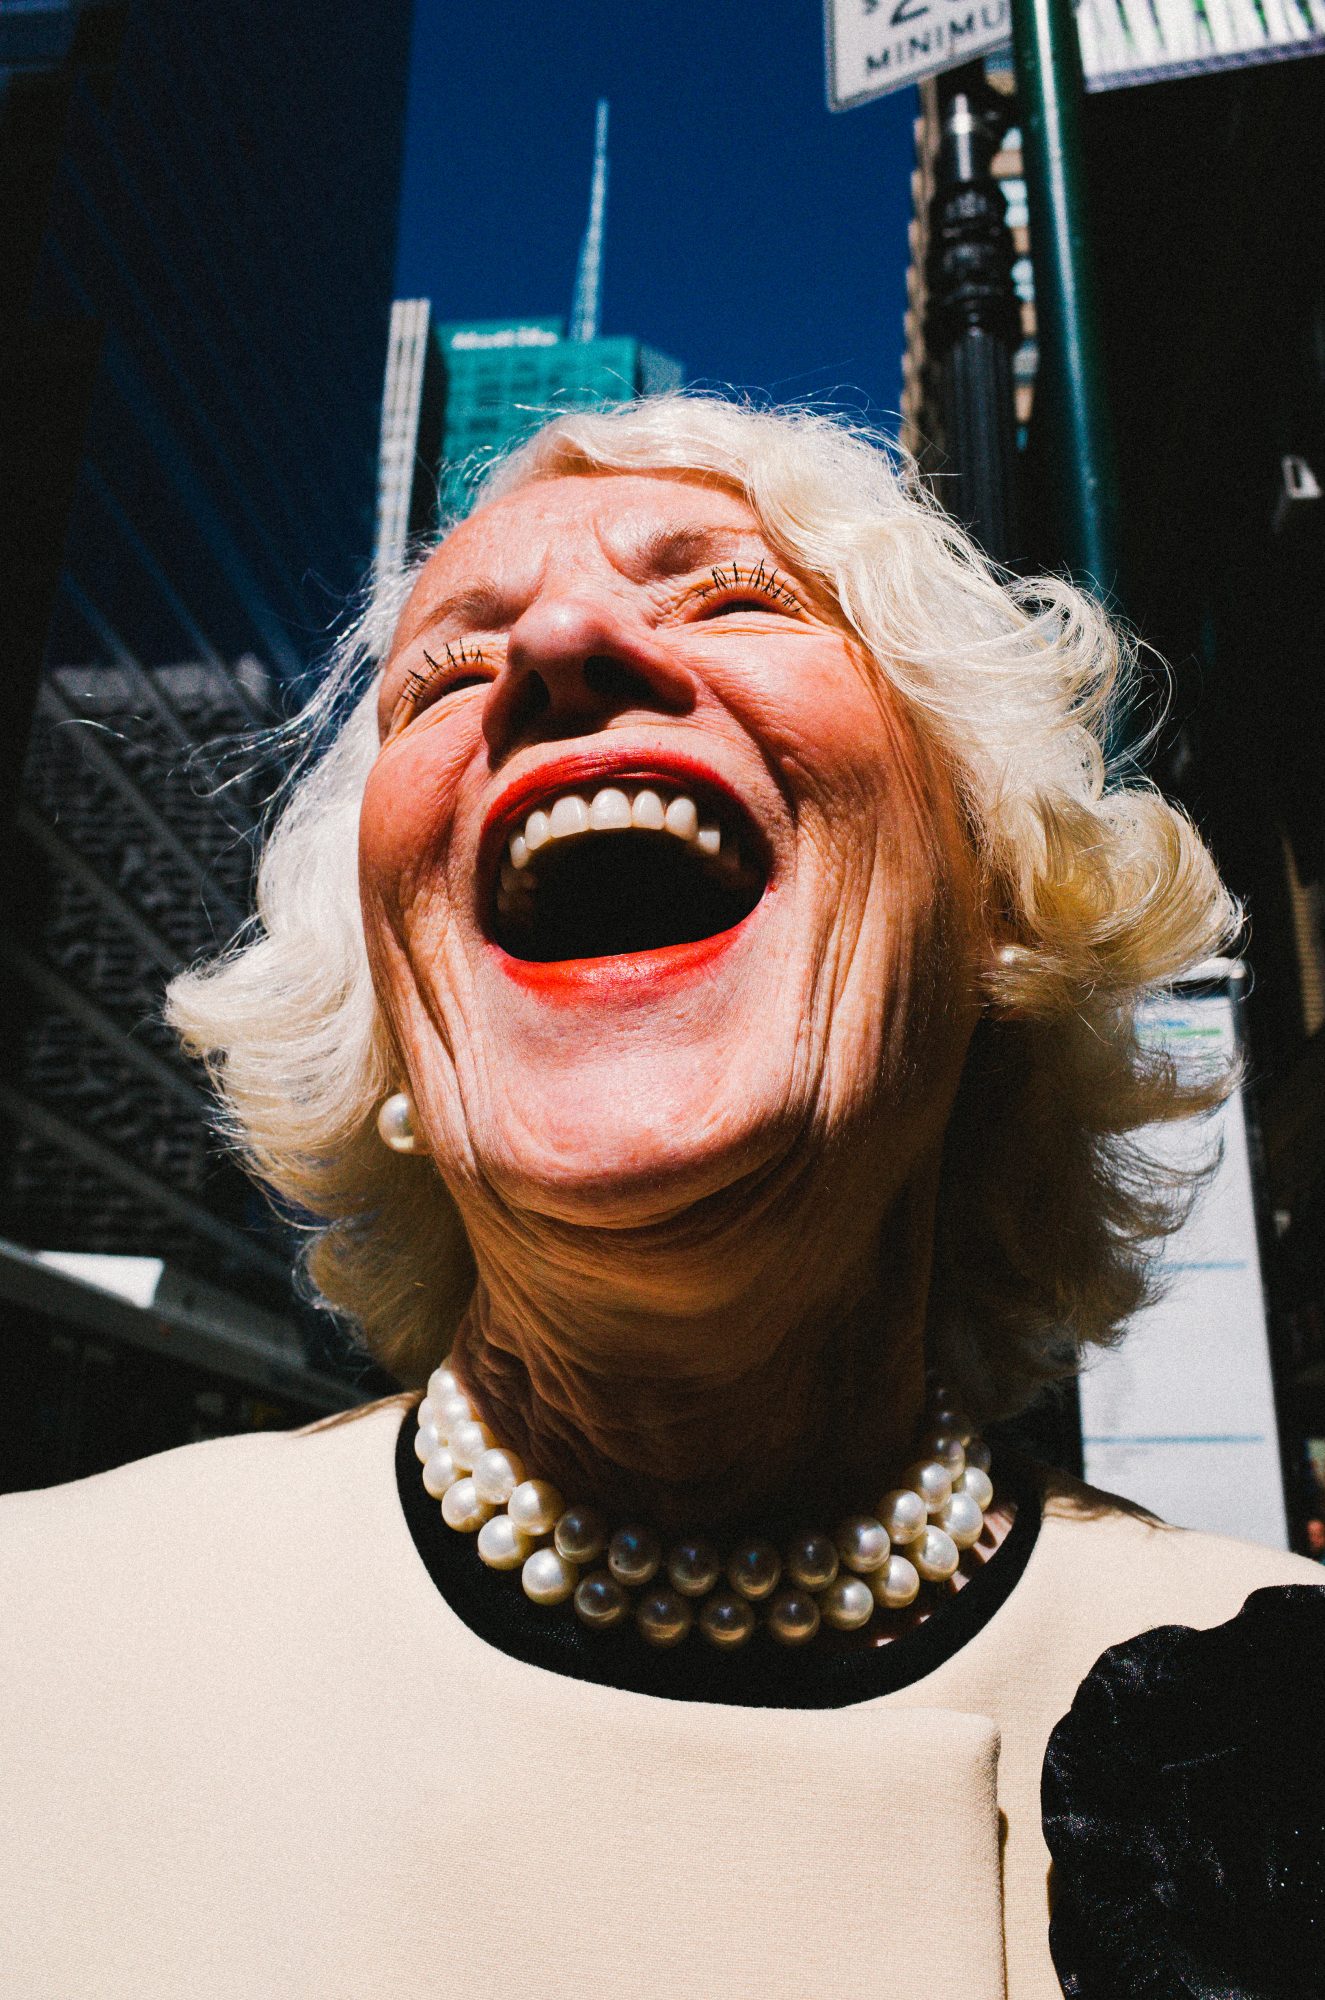 eric-kim-street-photography-street-portraits-1-laughing-lady-nyc